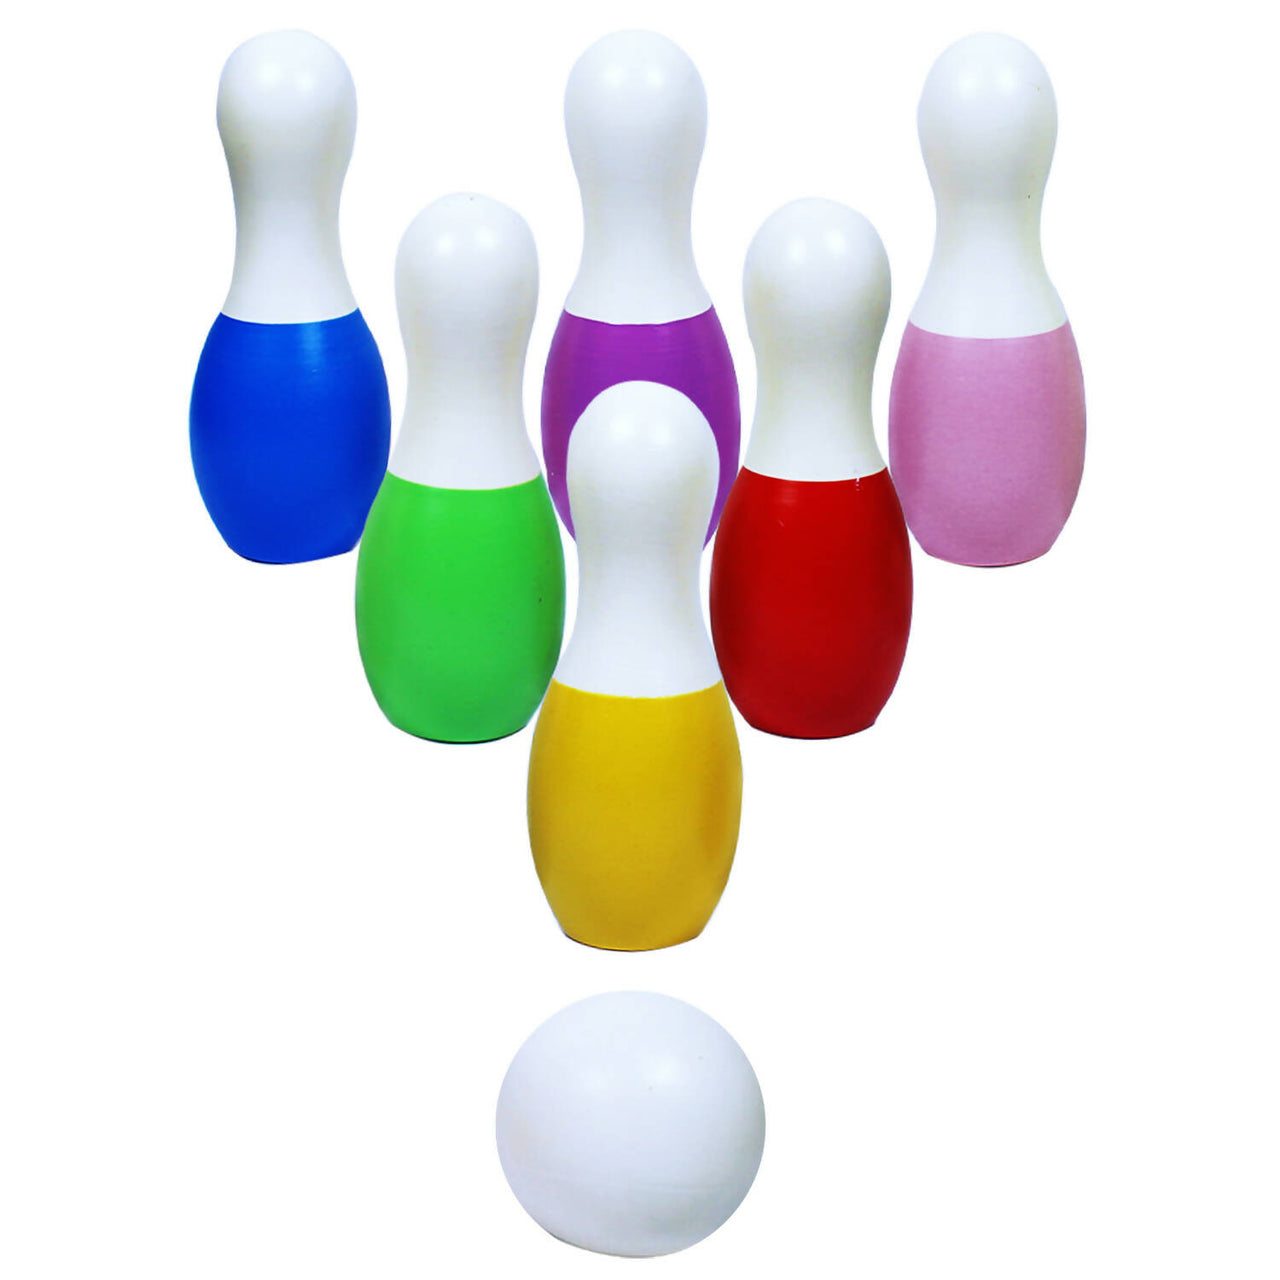 Matoyi Color Bowling Pin & Rainbow Stacker & Yoyo For Kids - Distacart